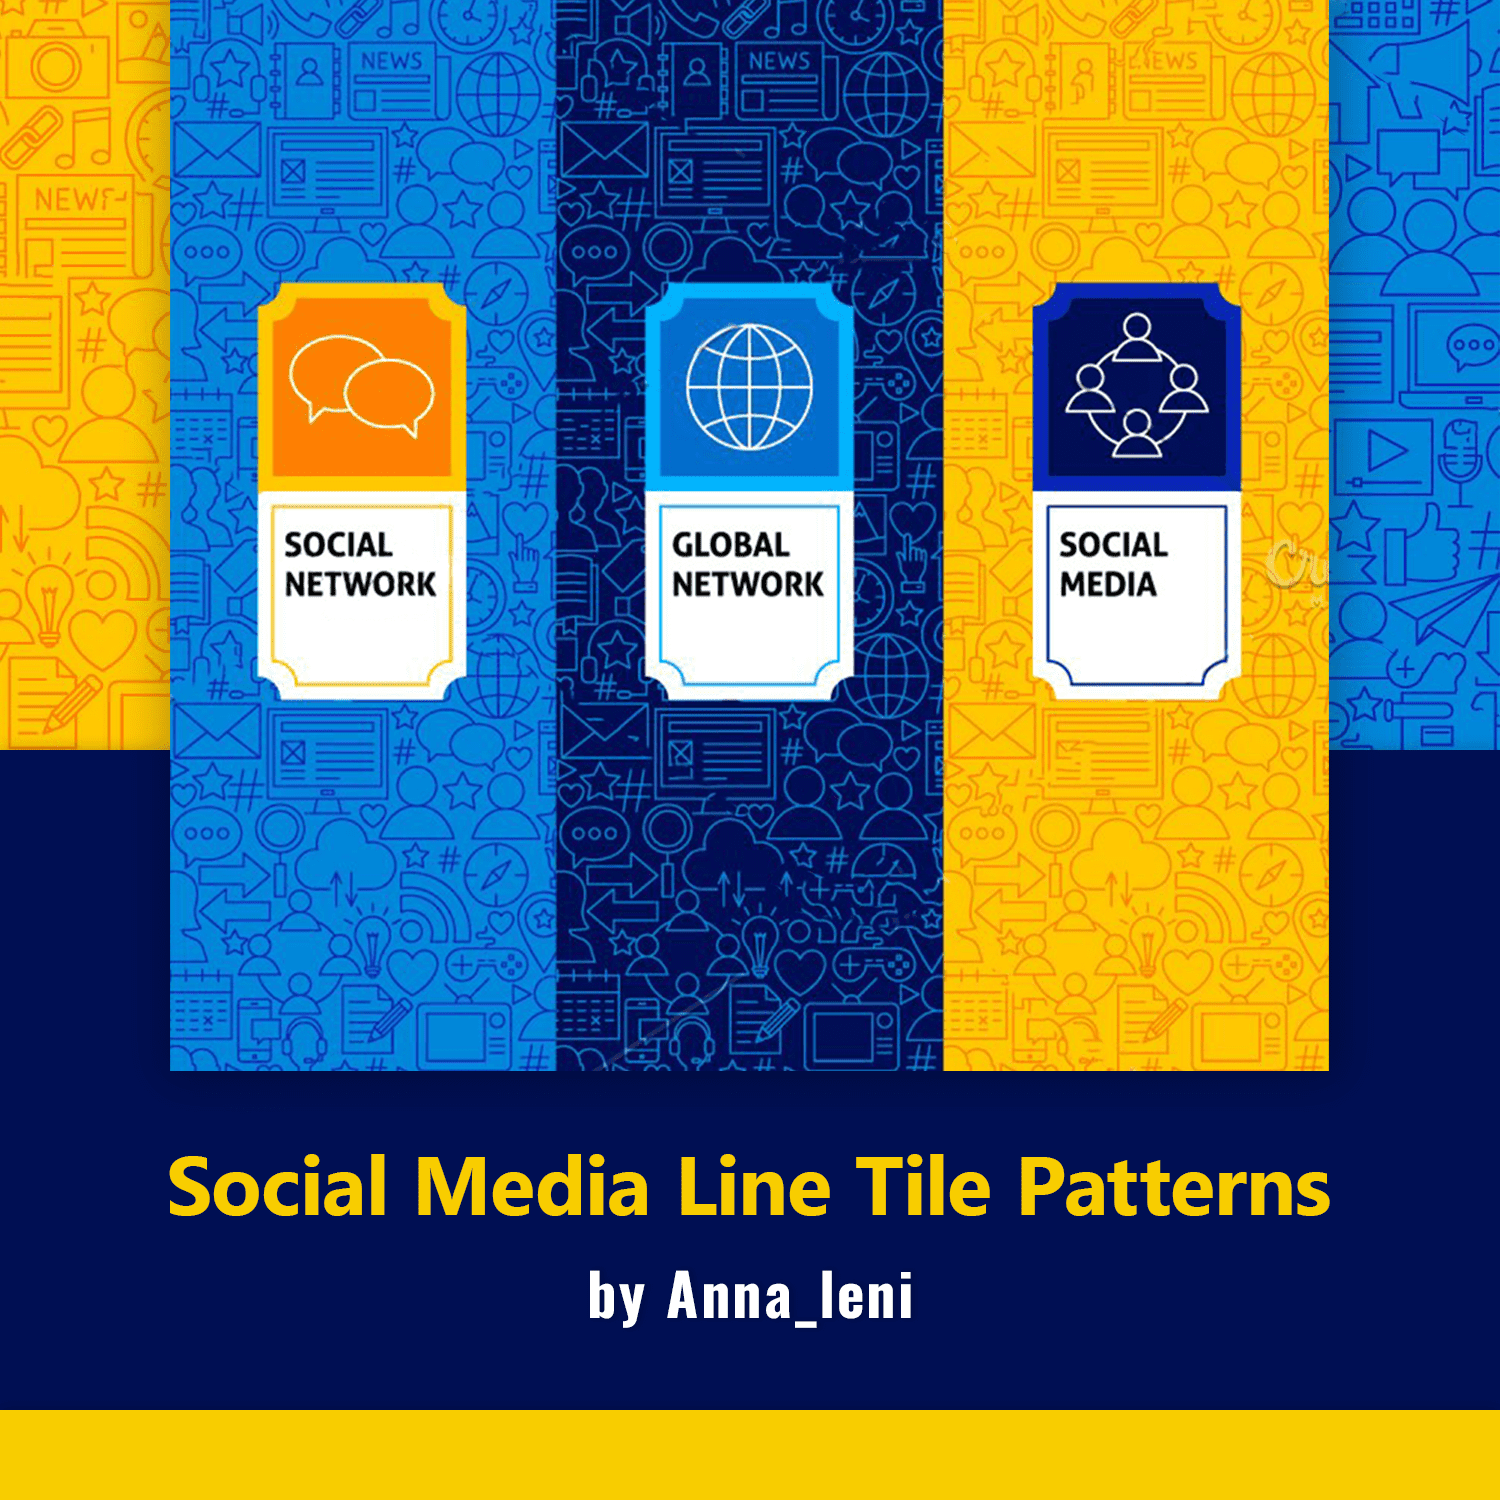 Social Media Line Tile Patterns cover.